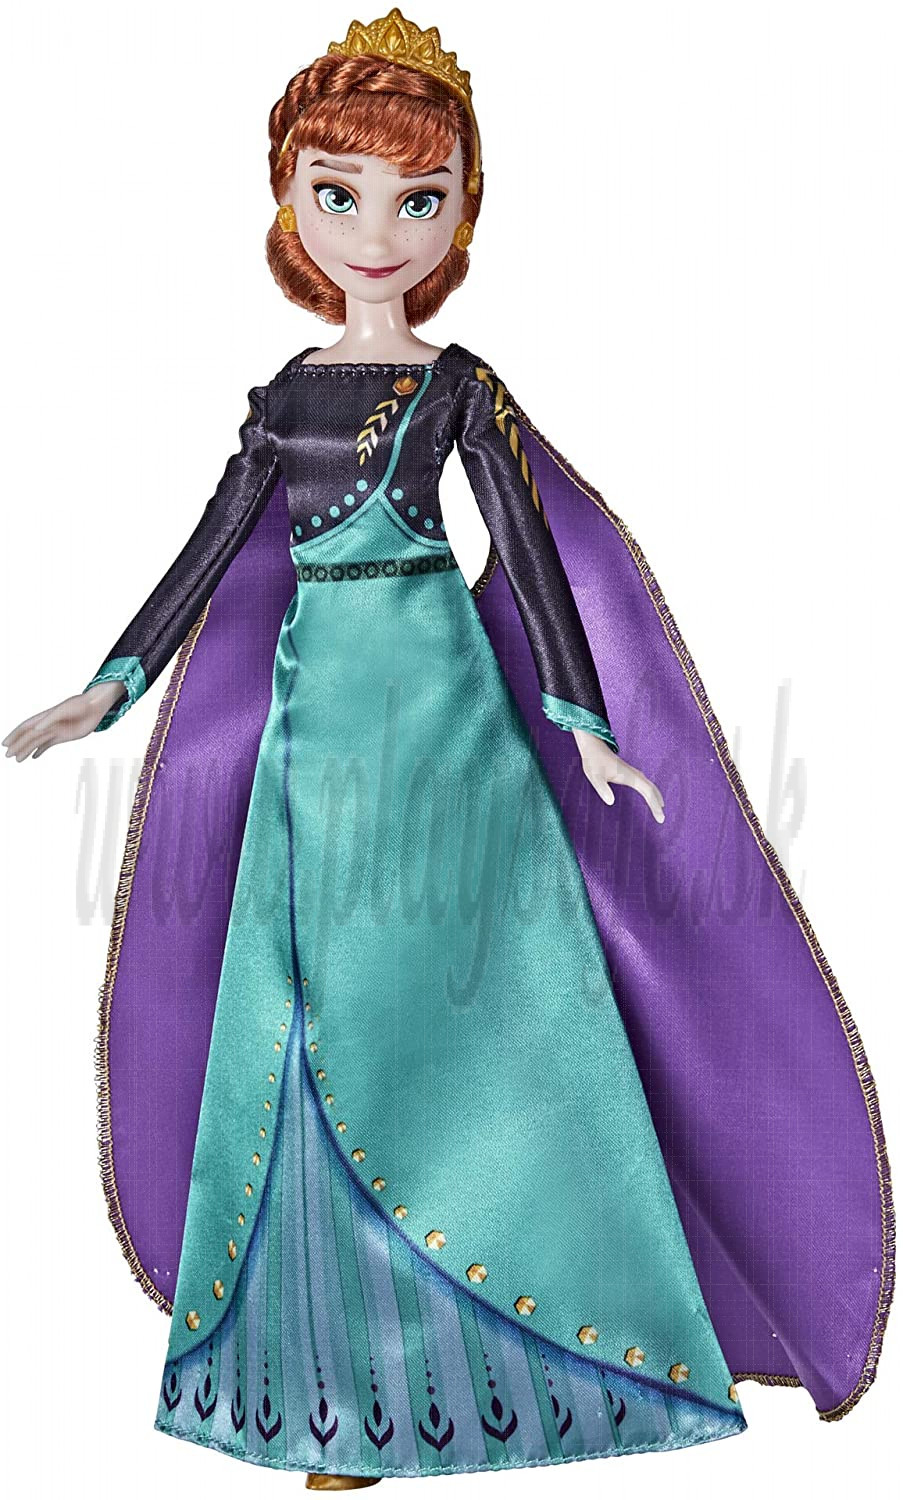 Hasbro Disney Frozen II Bábika Anna Kráľovná, 29cm